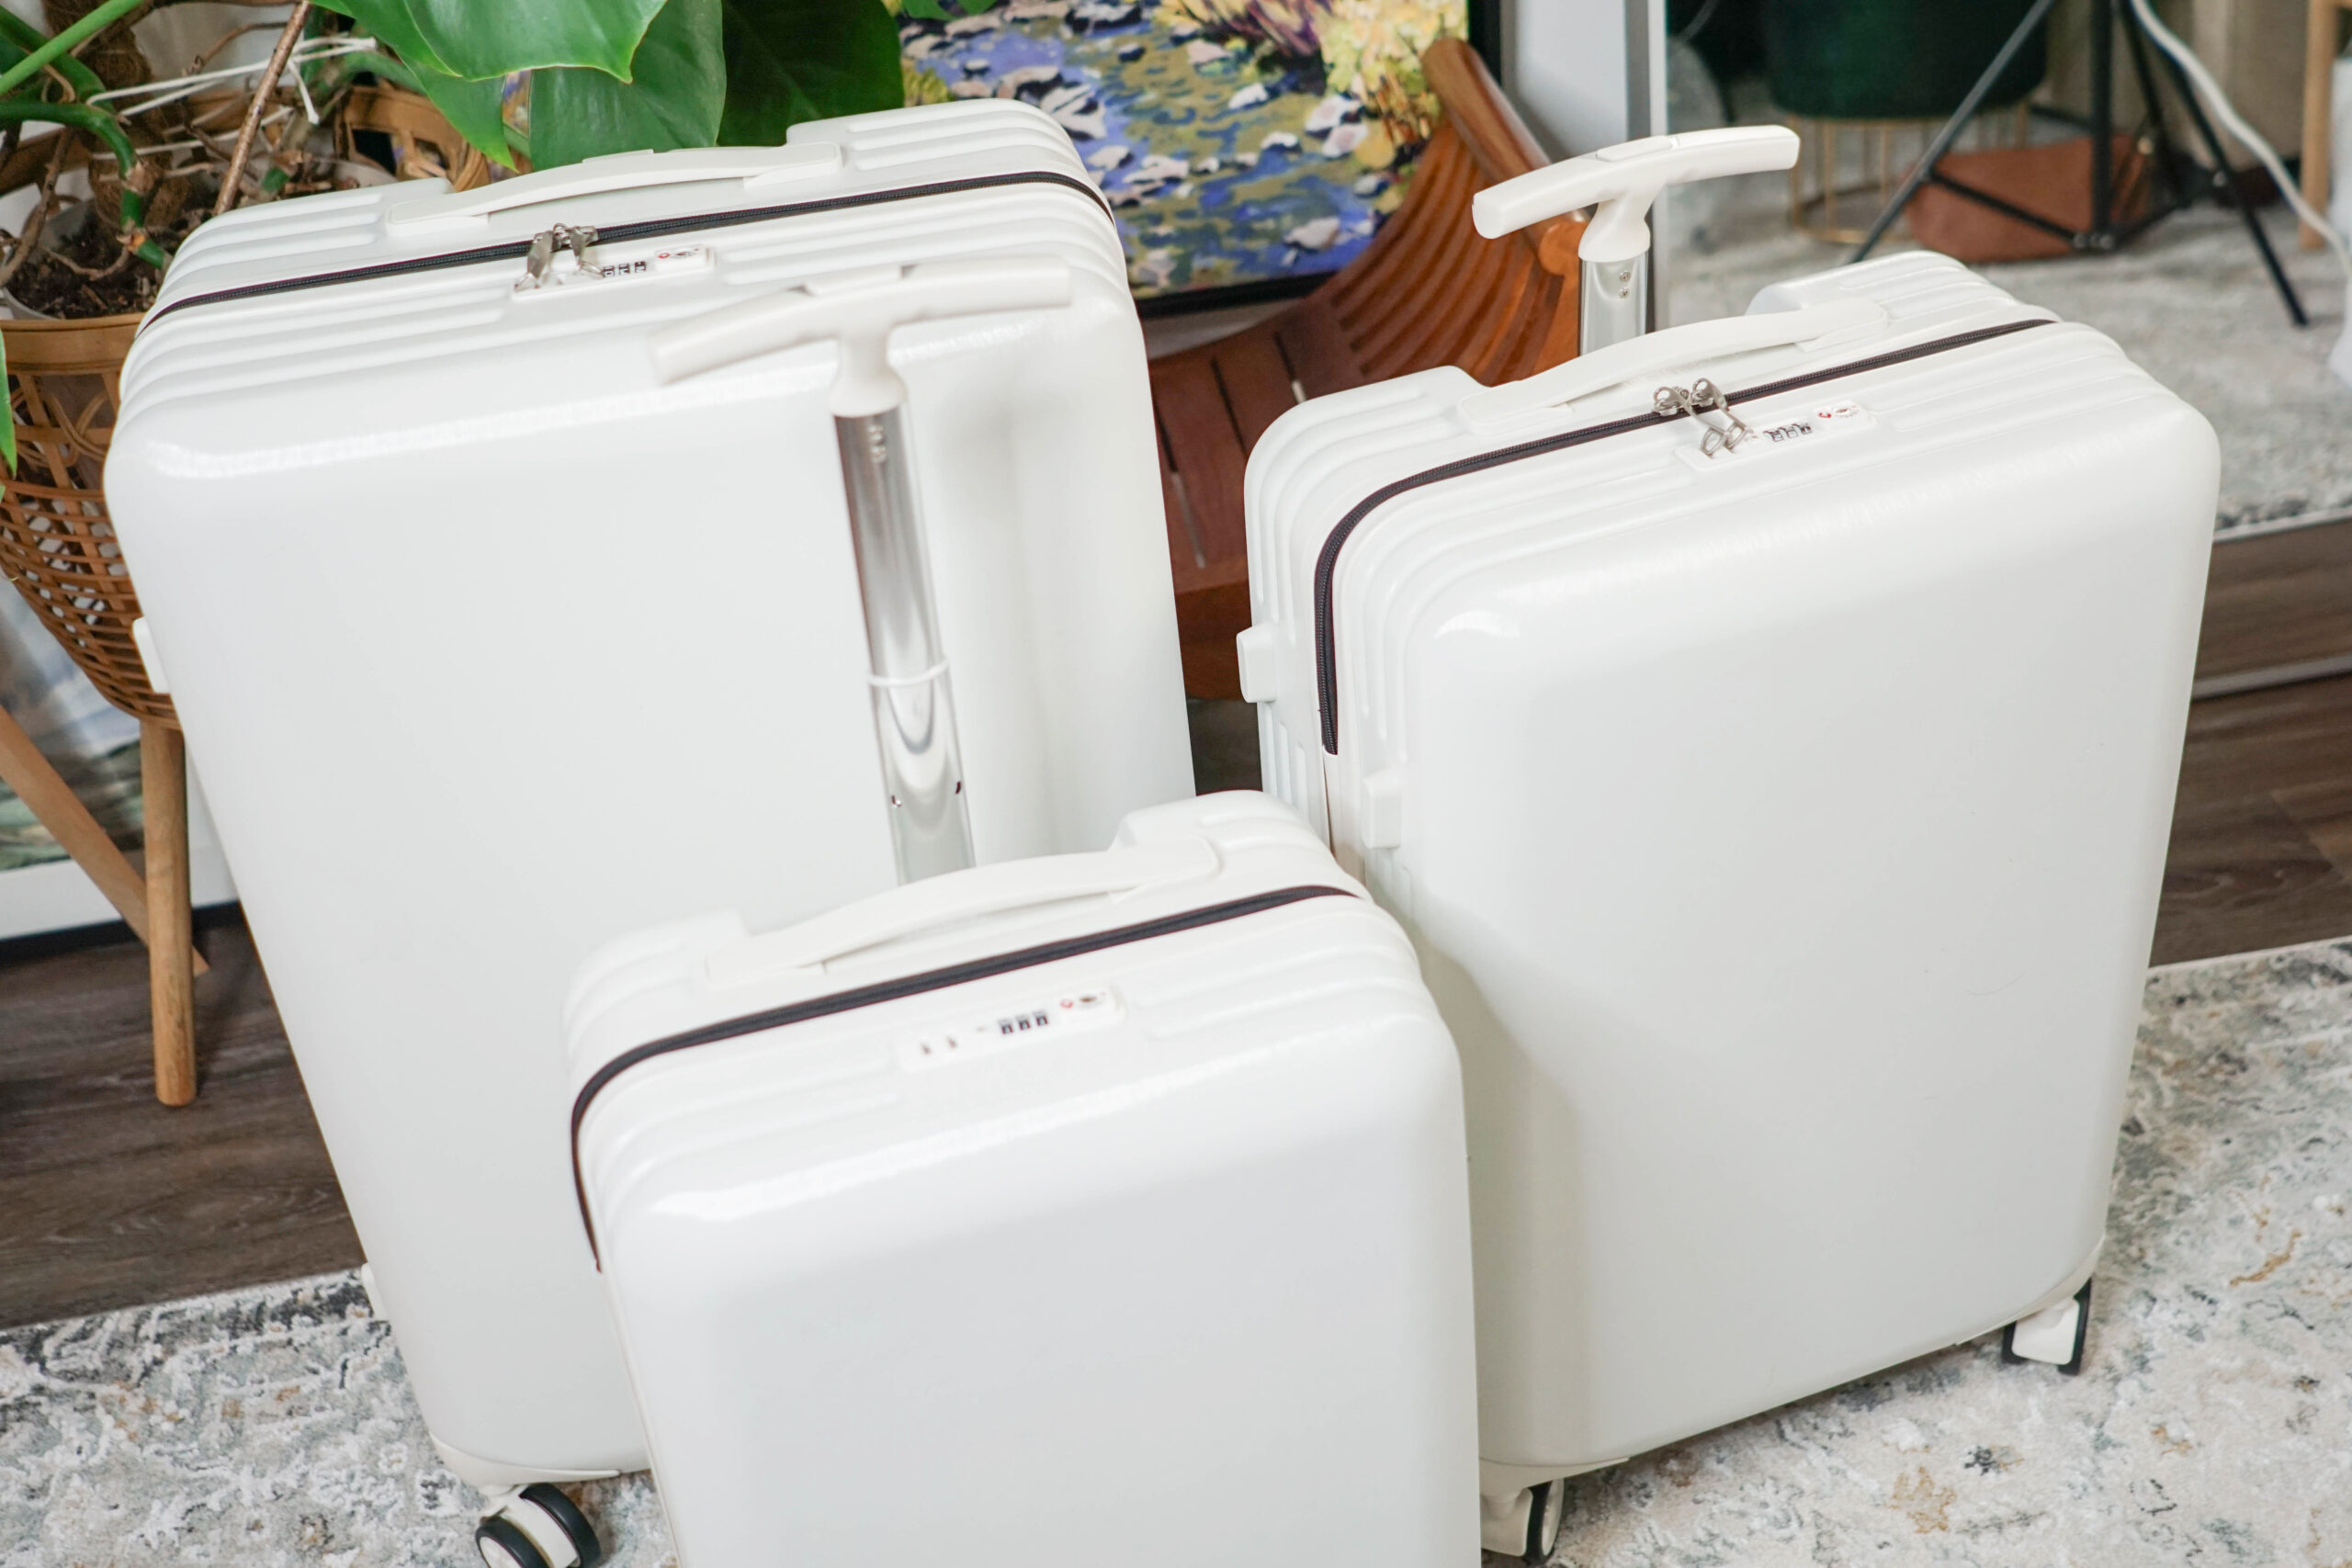 Hikolayae Mesa white luggage set review